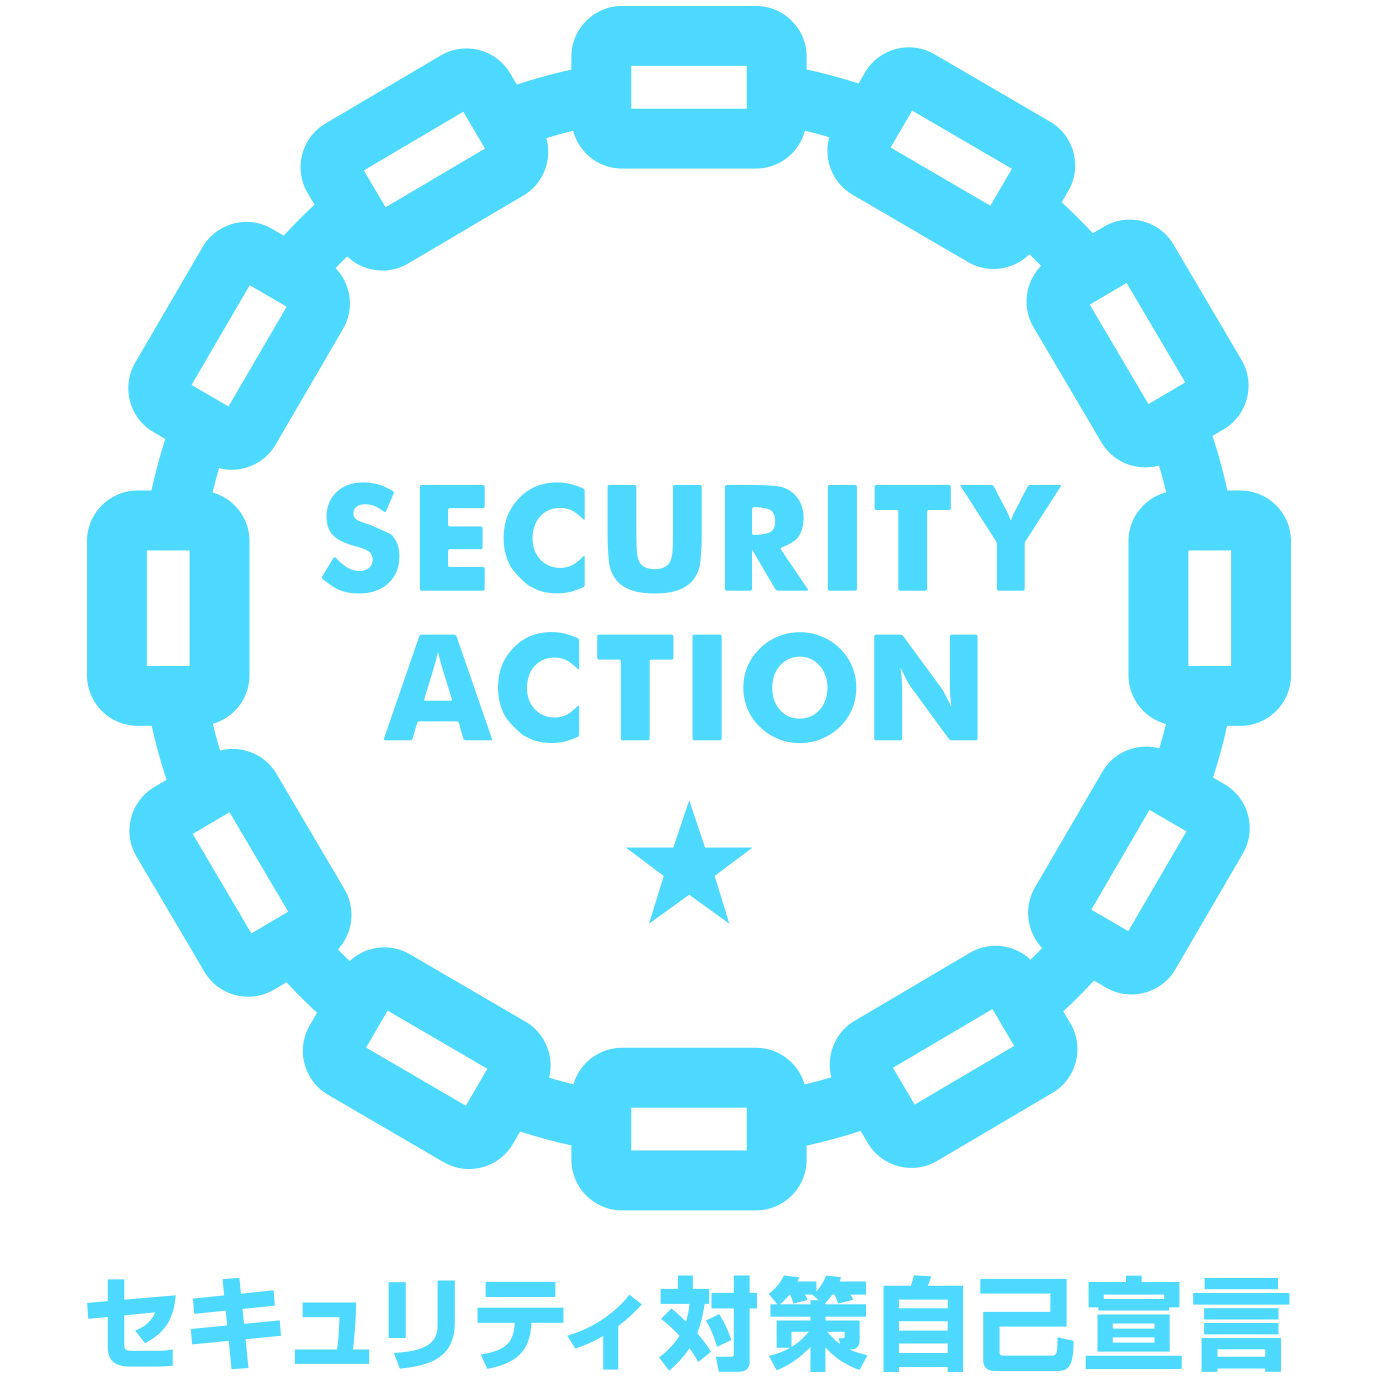 SECURITY ACTION（セキュリティ対策自己宣言）